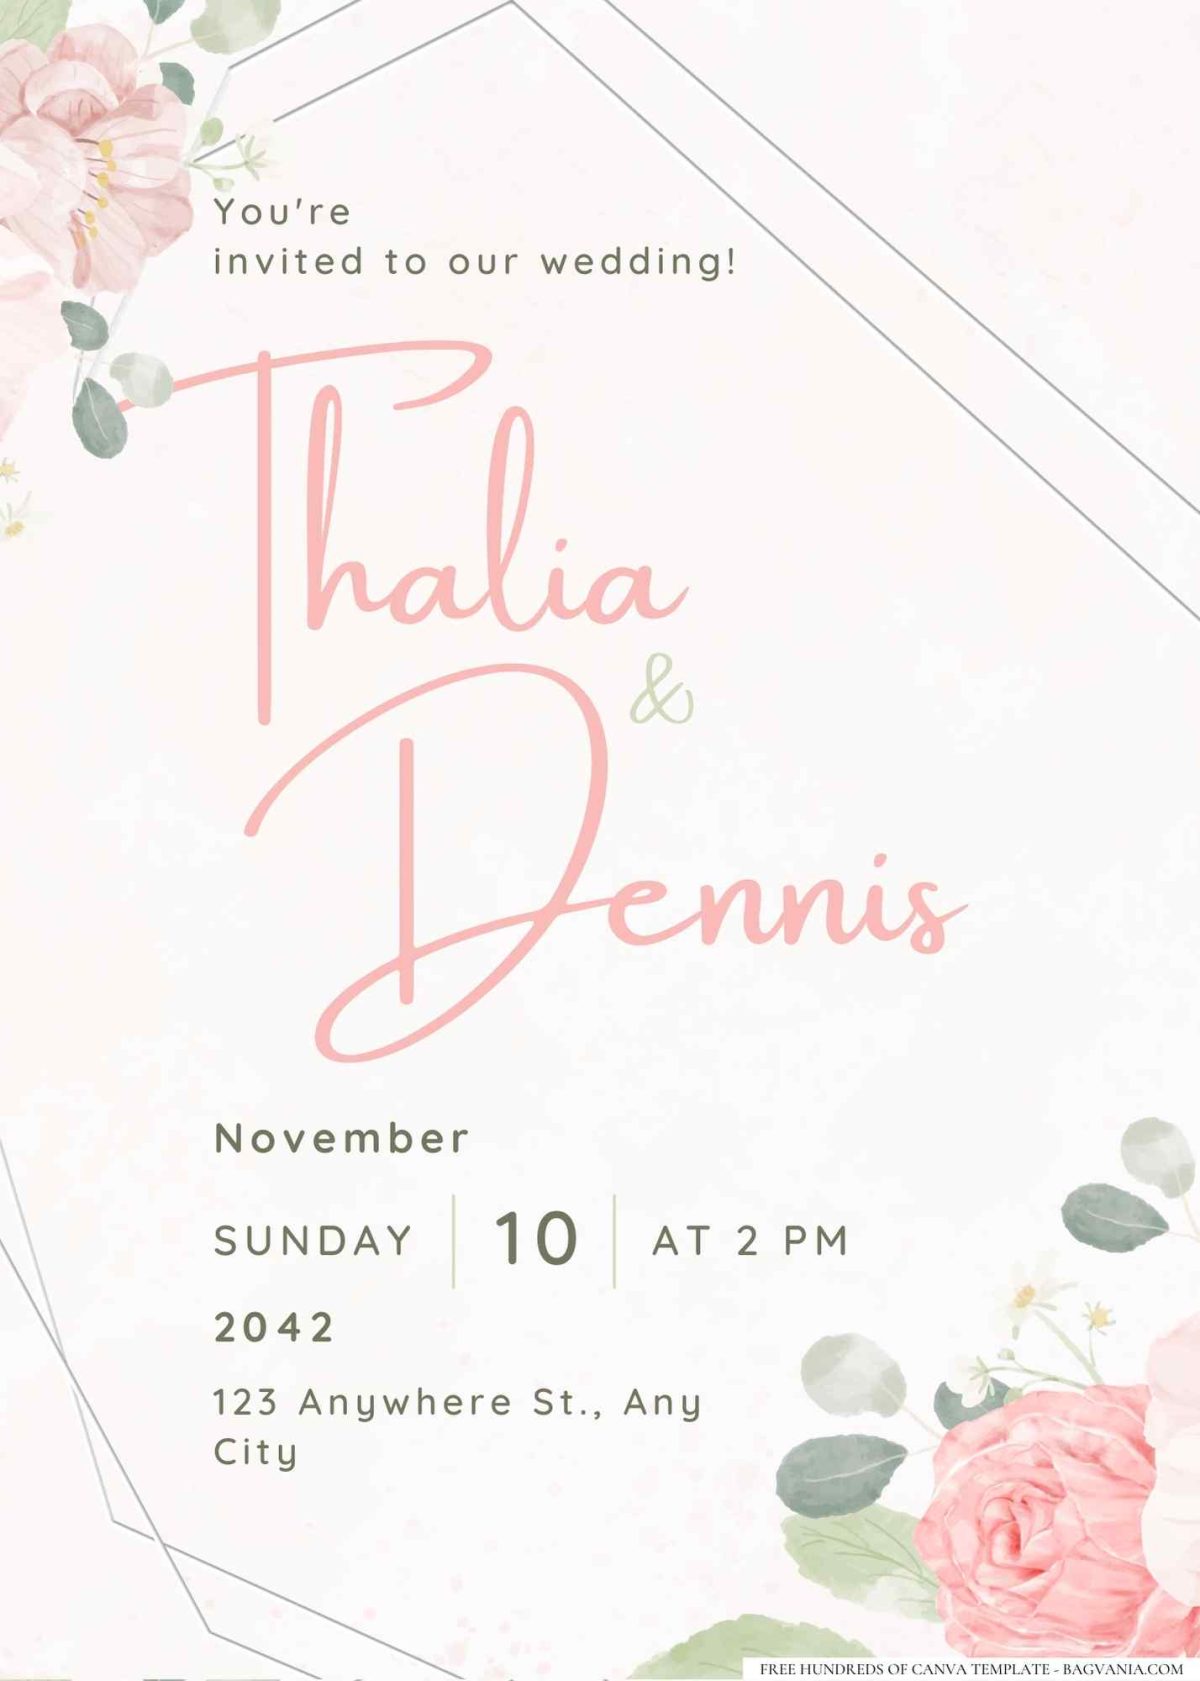 FREE Editable Delicate Rose and Peony Illustrations Wedding Invitation